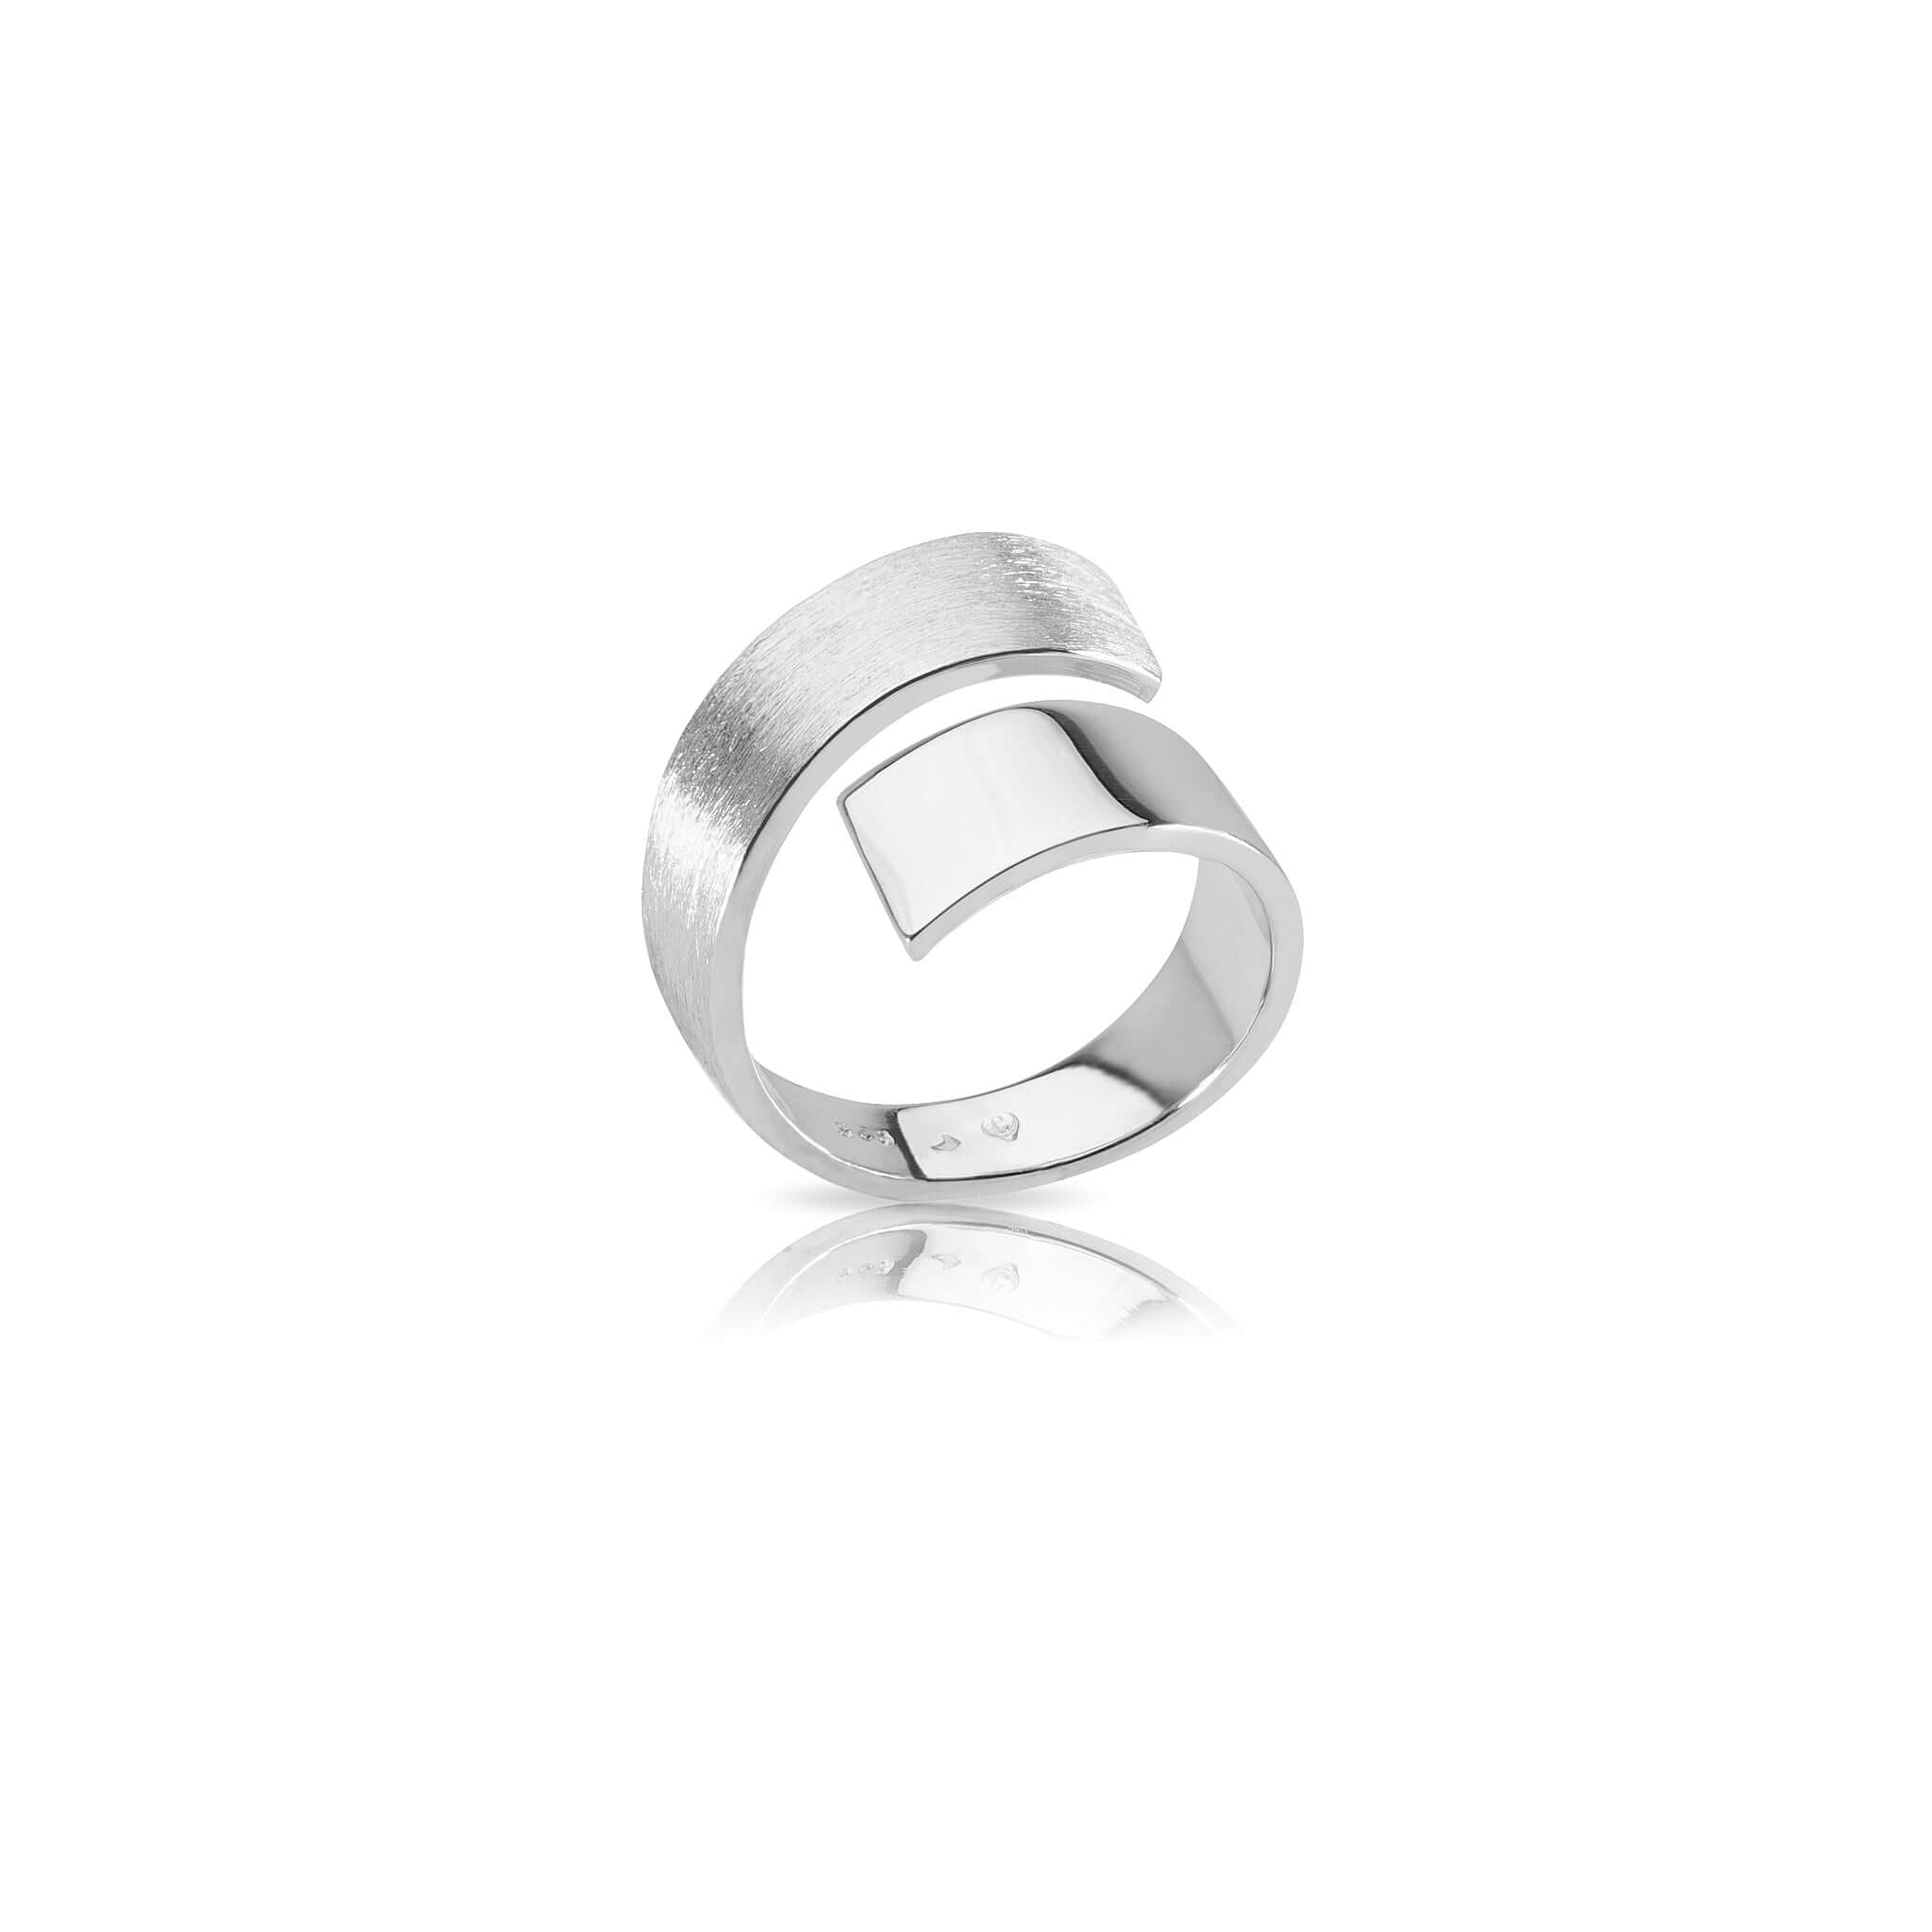 Double silver ring by Ekenberg